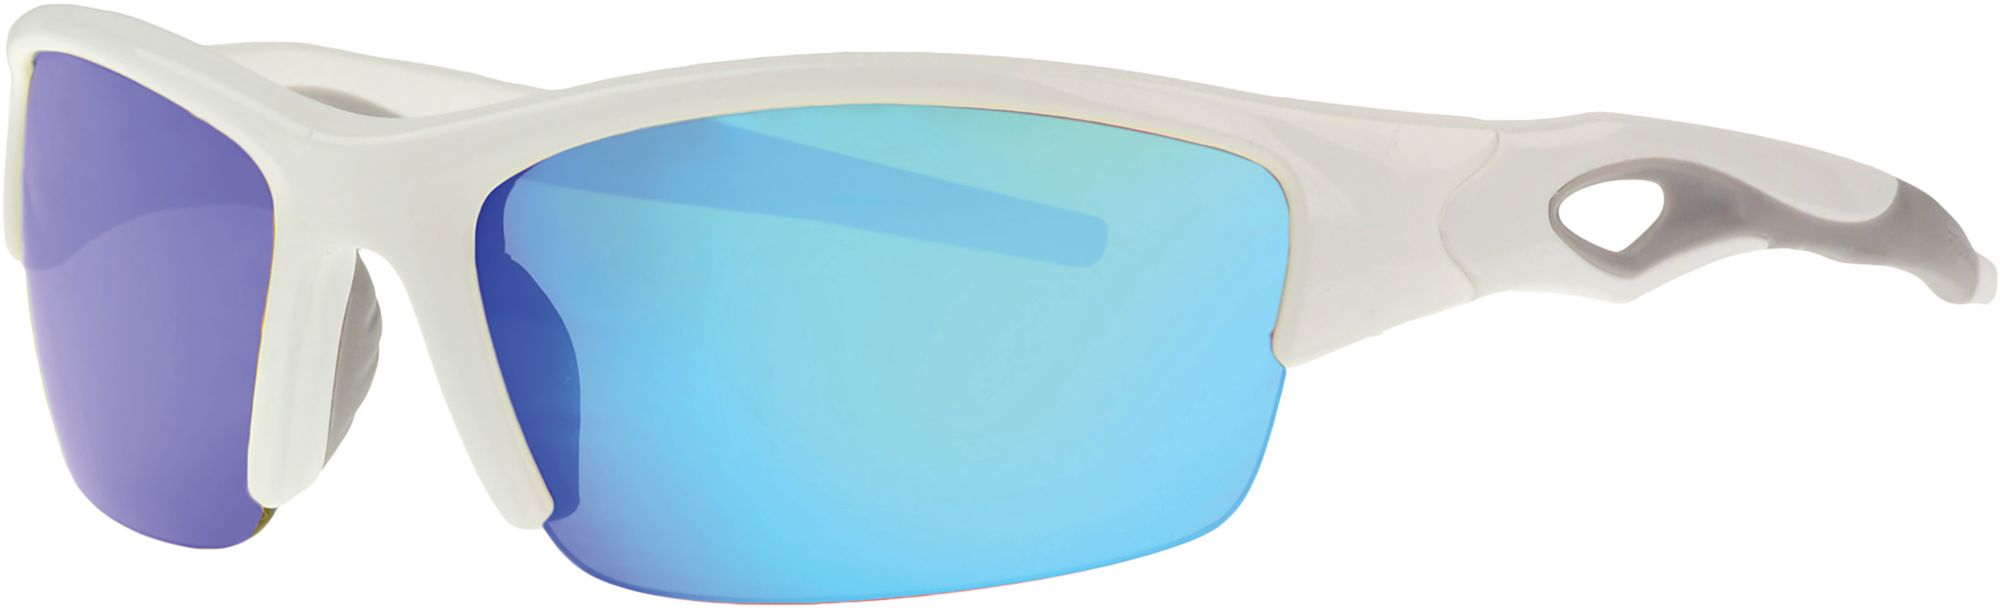 oakley softball sunglasses